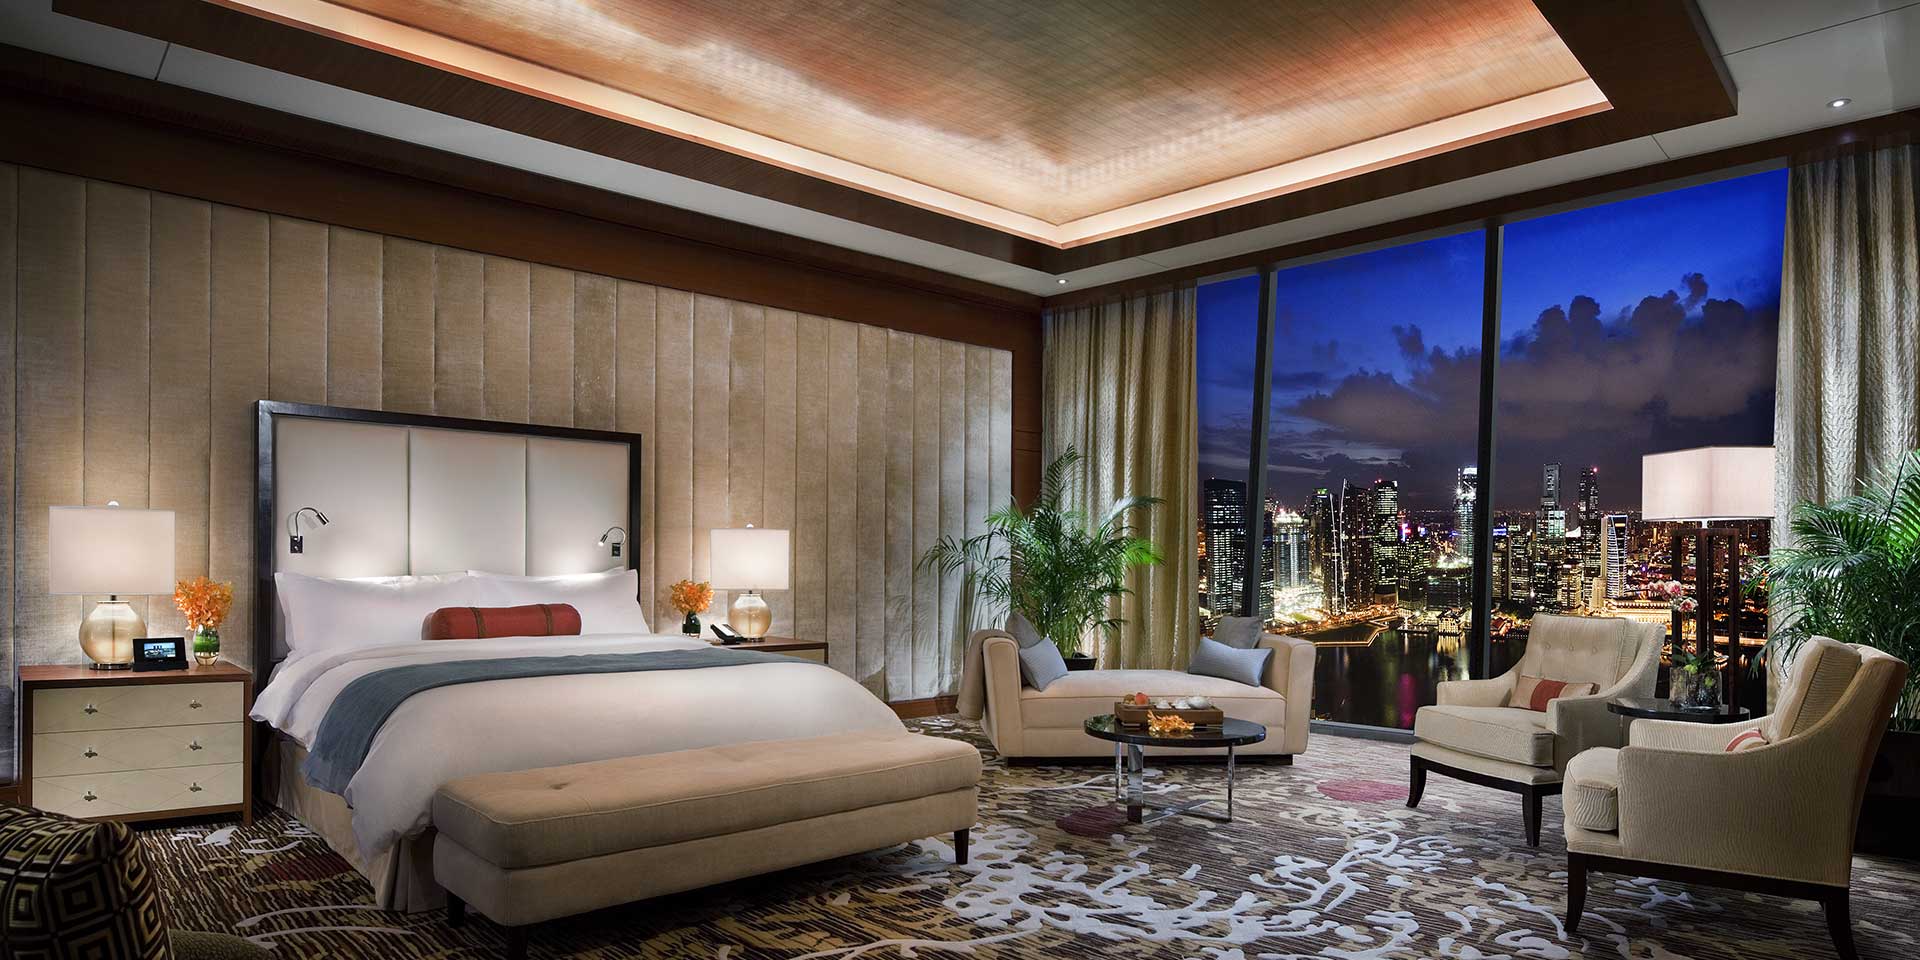 Presidential Suite Master Bedroom at Marina Bay Sands